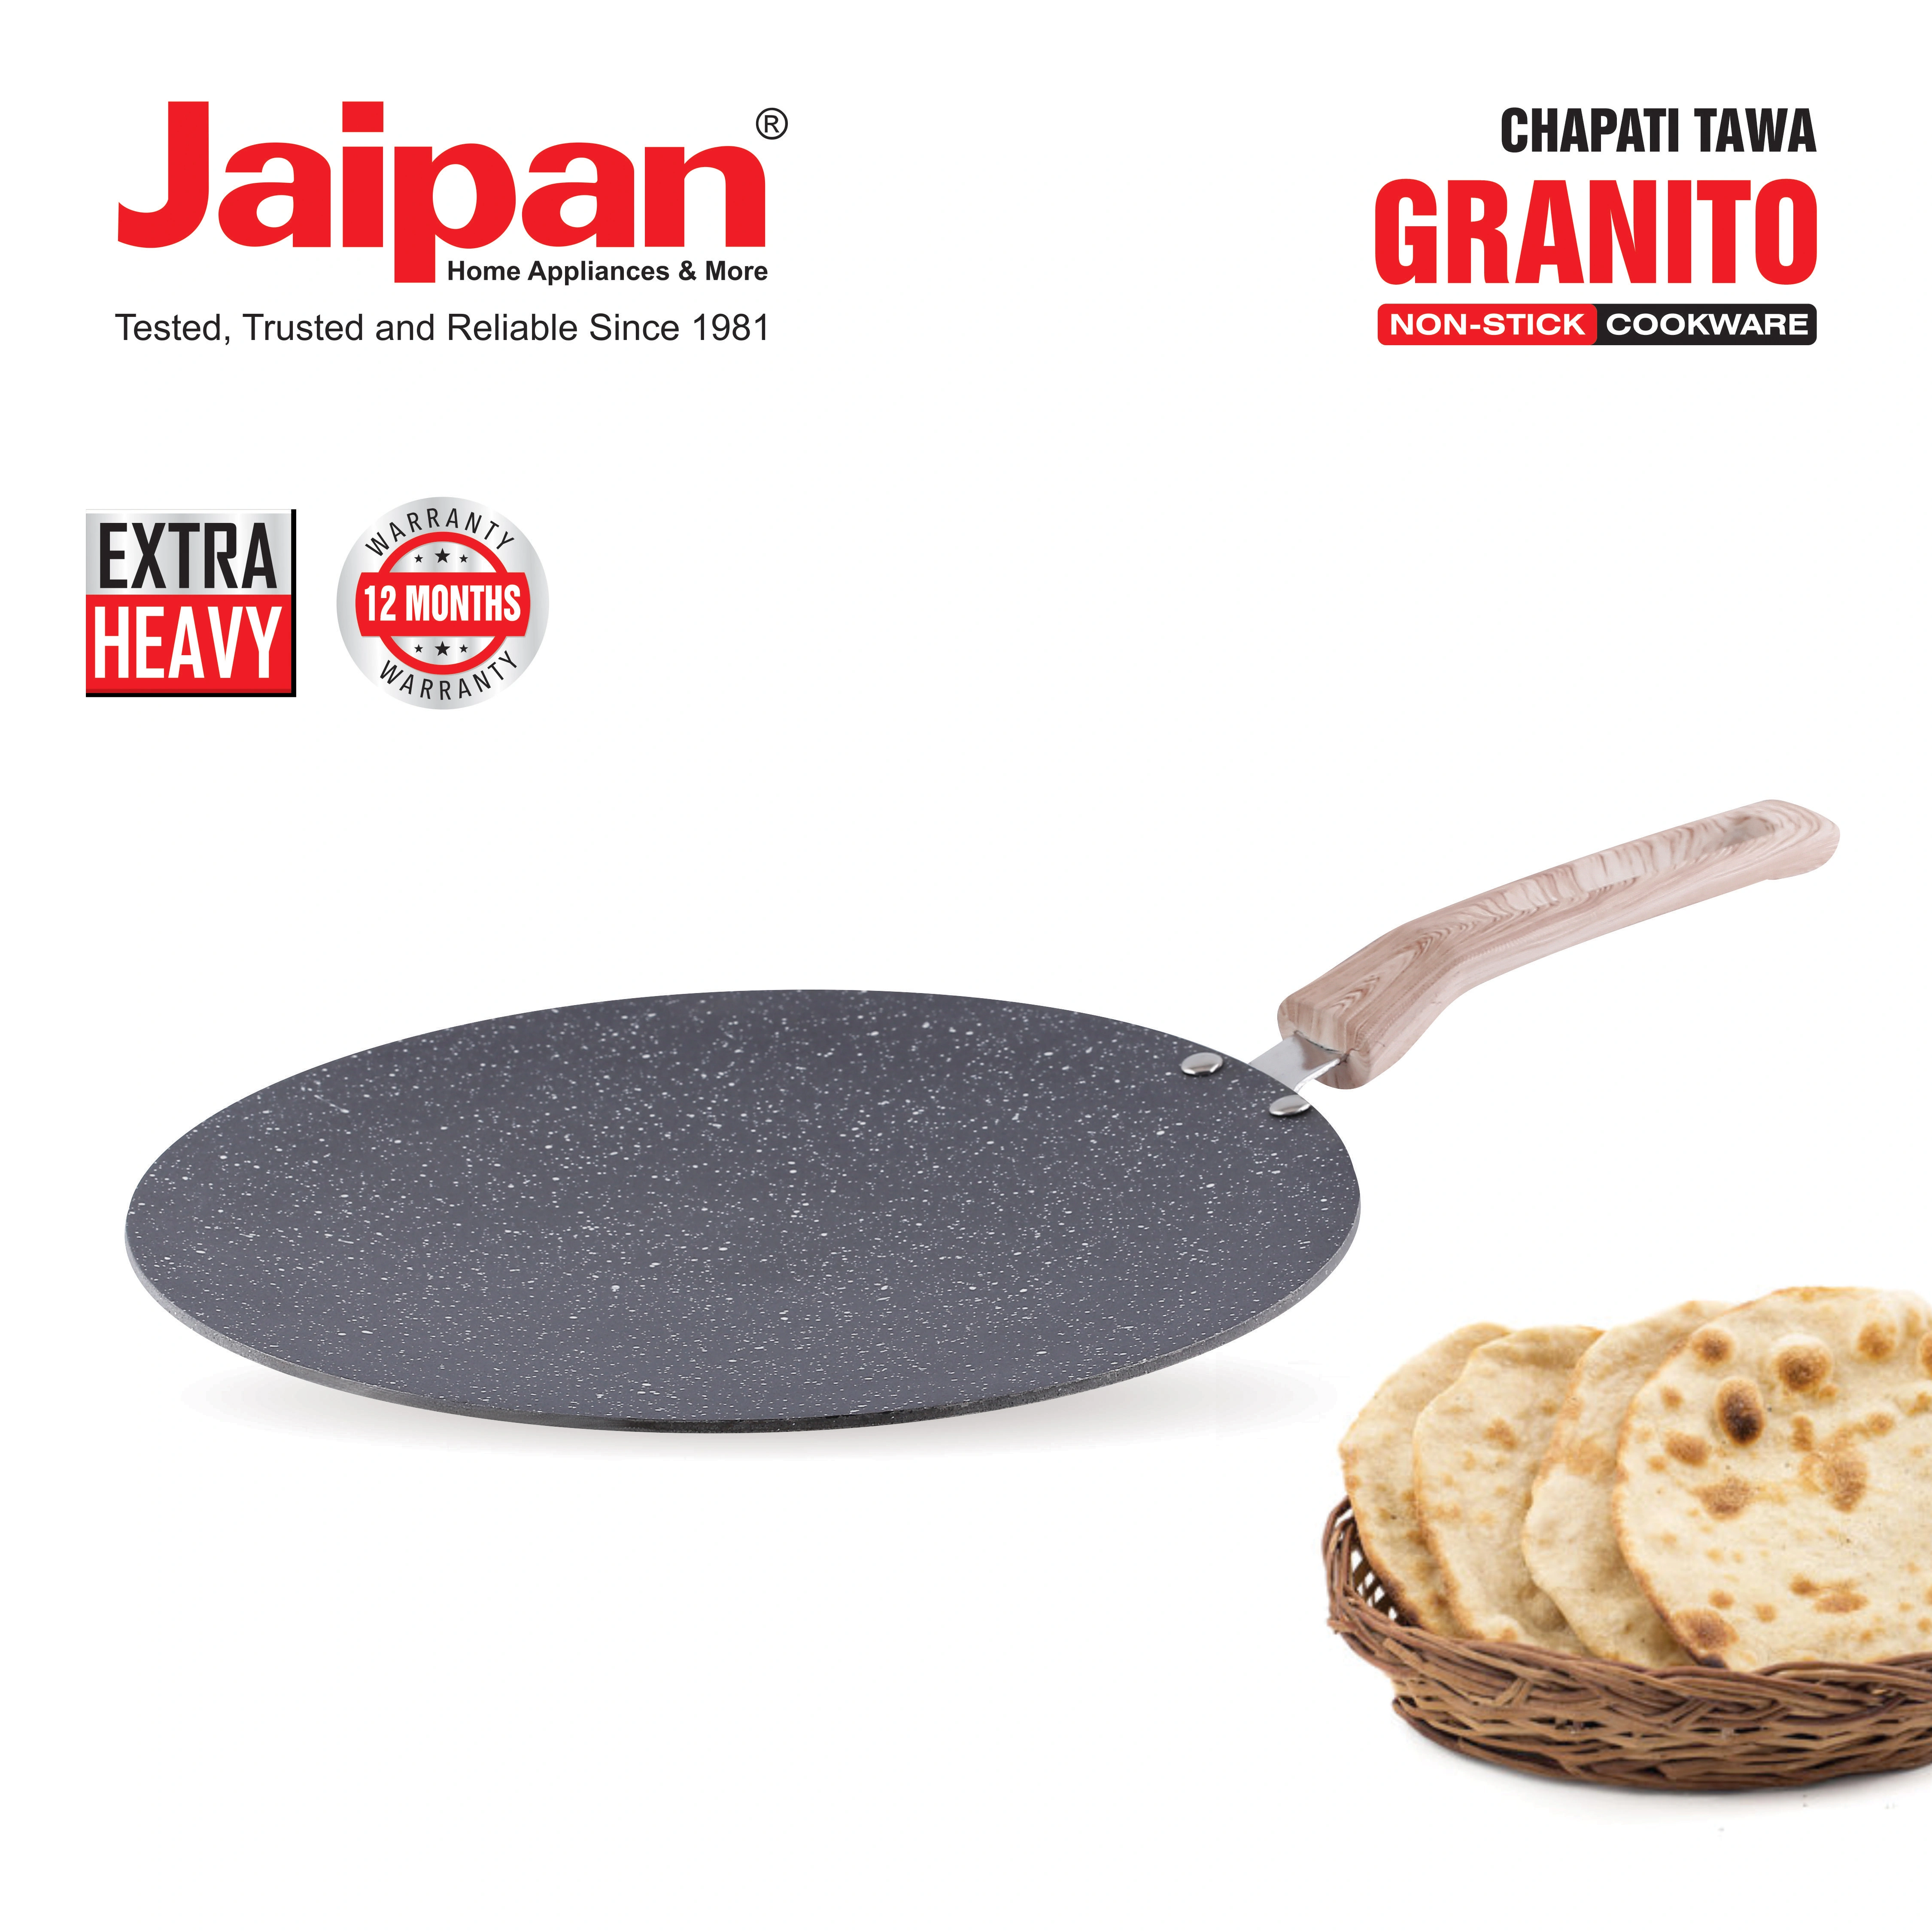 Jua Kali Products - Chapati pan/flat pan for sale. More info